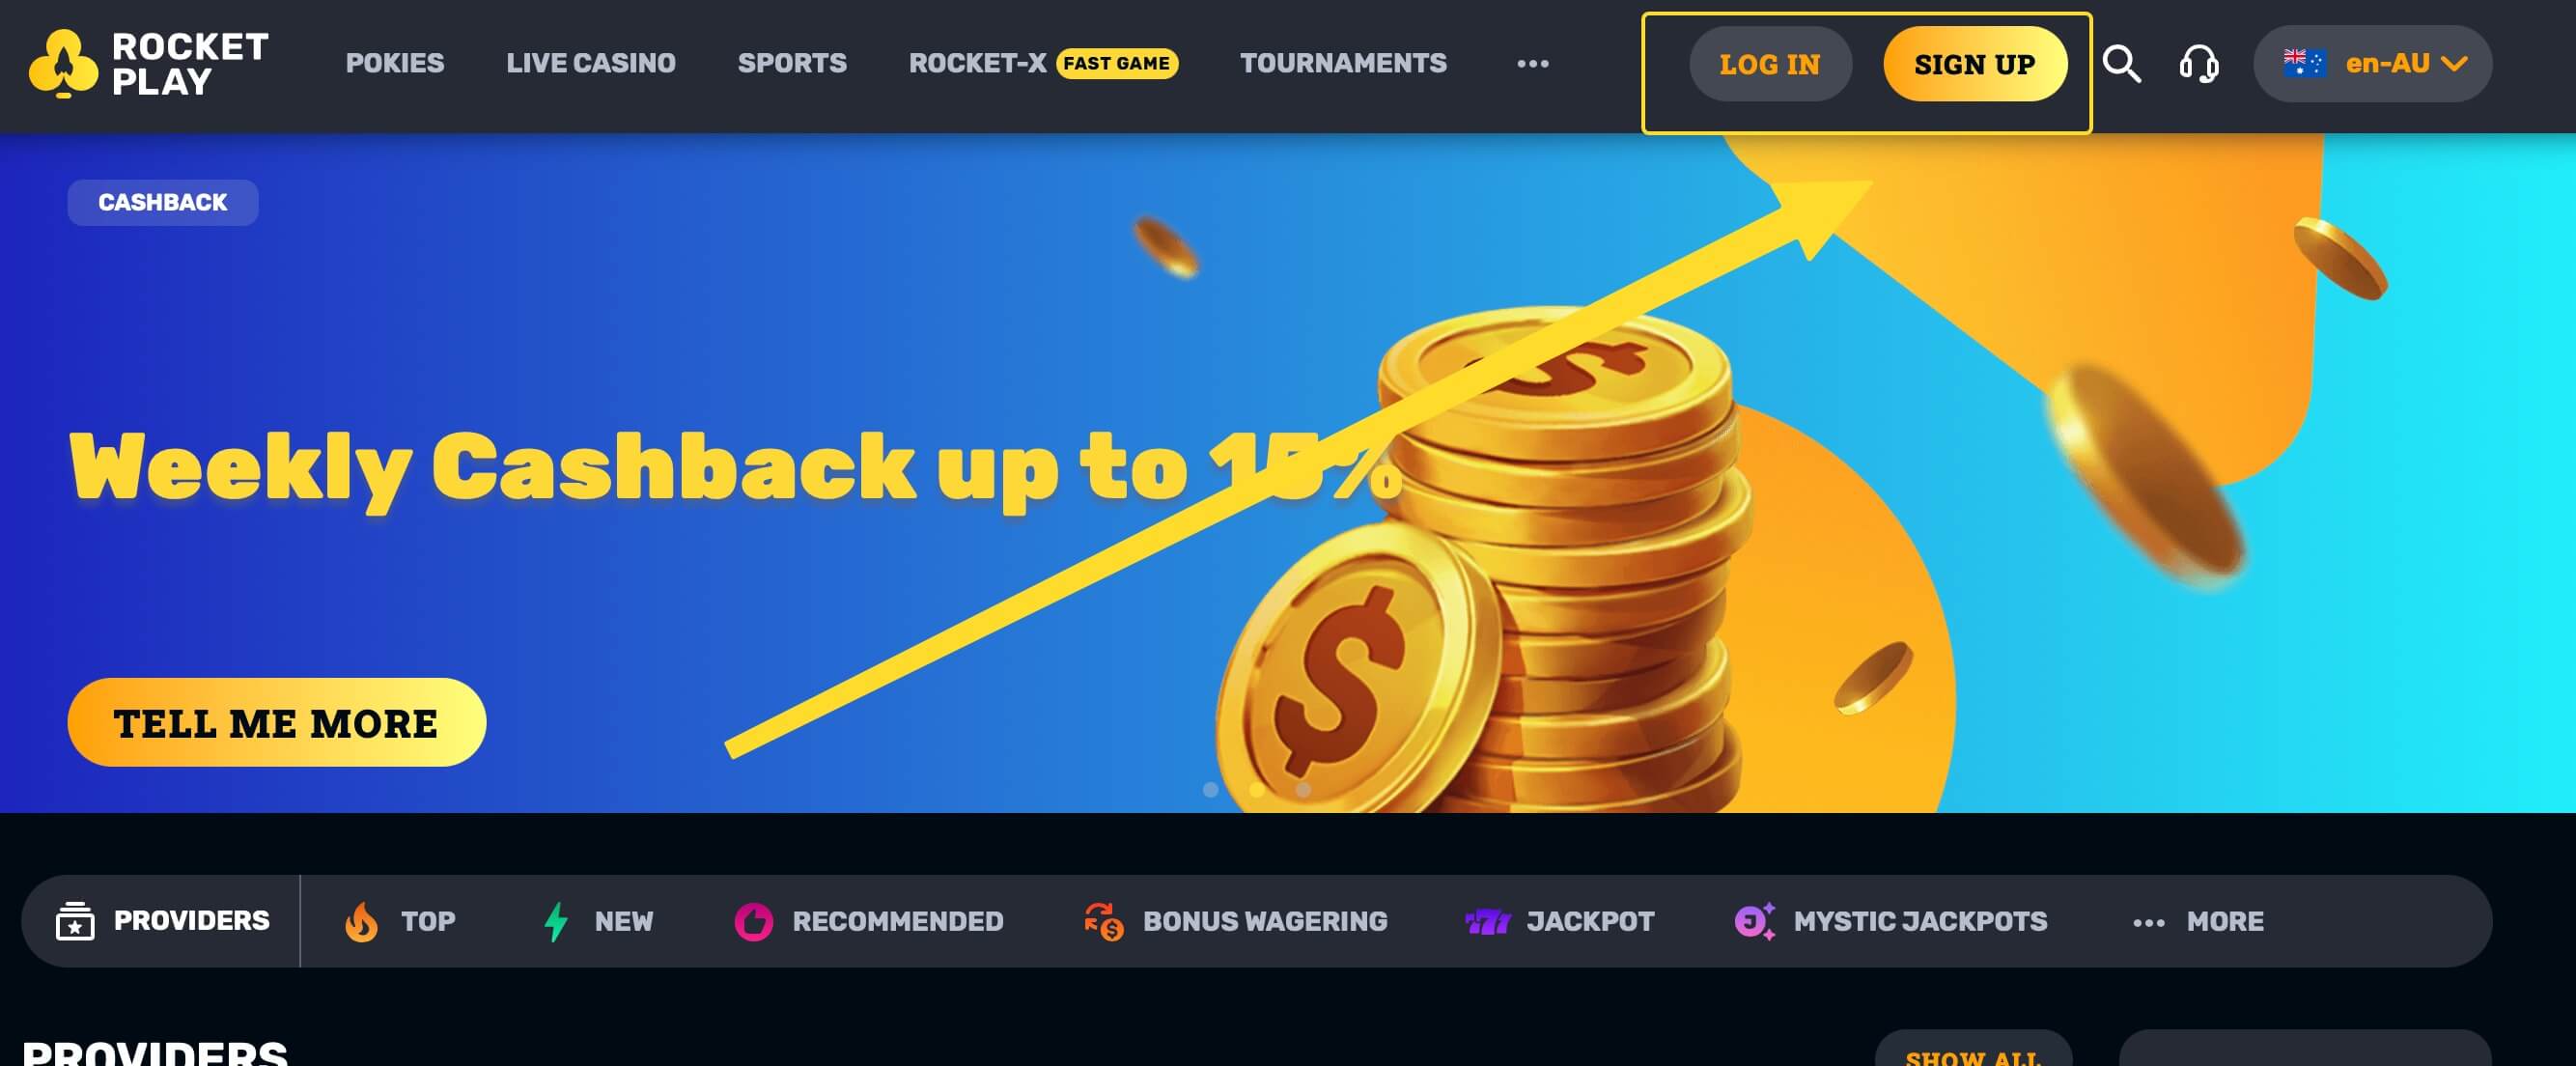 Homepage - Registration/Login at Rocket Play Casino